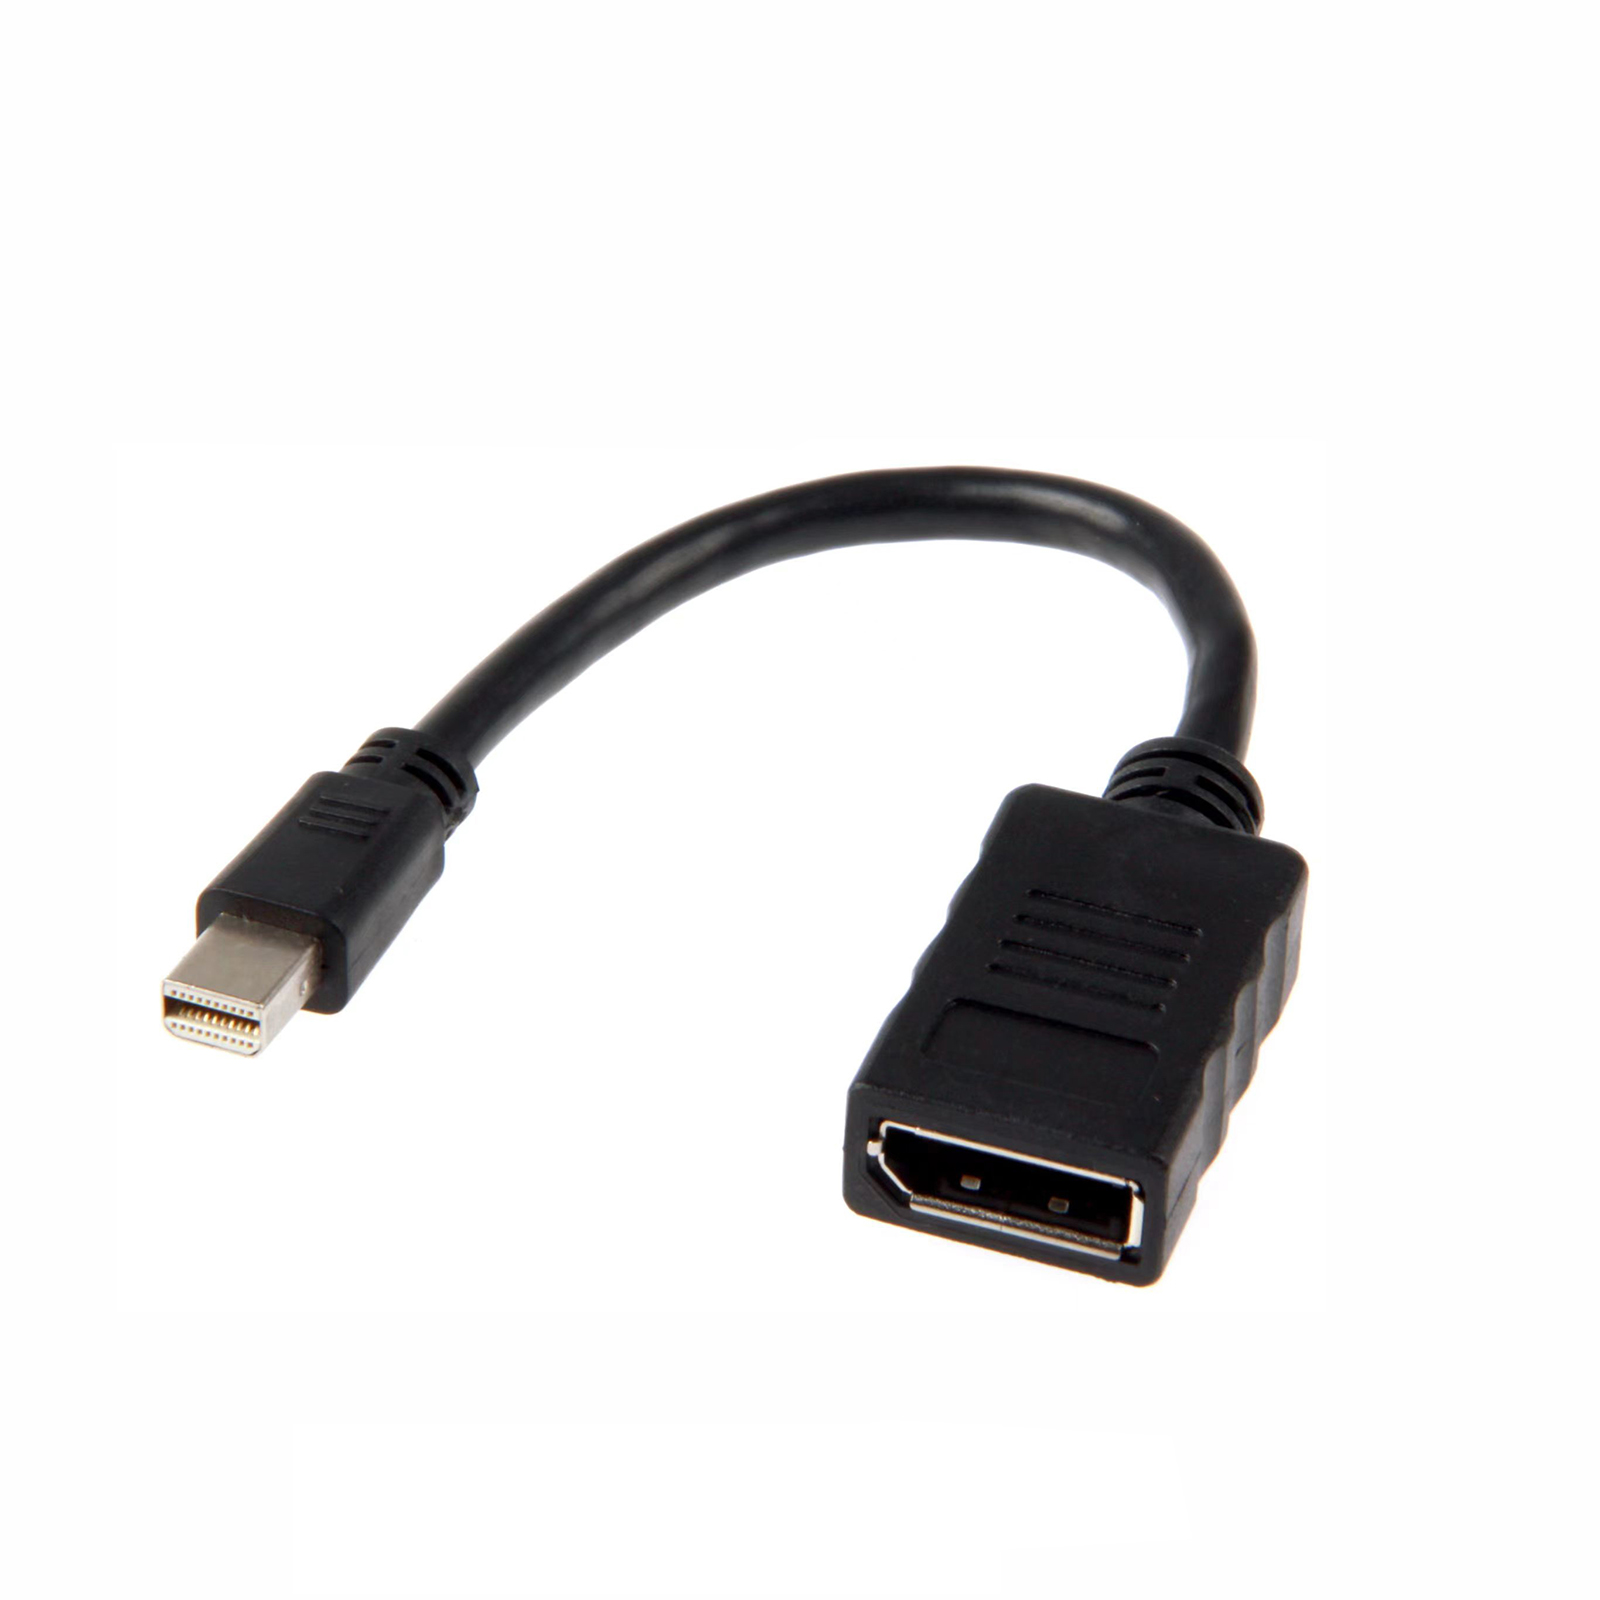 Mini-Displayport to standard Displayport converter cable length 17cm